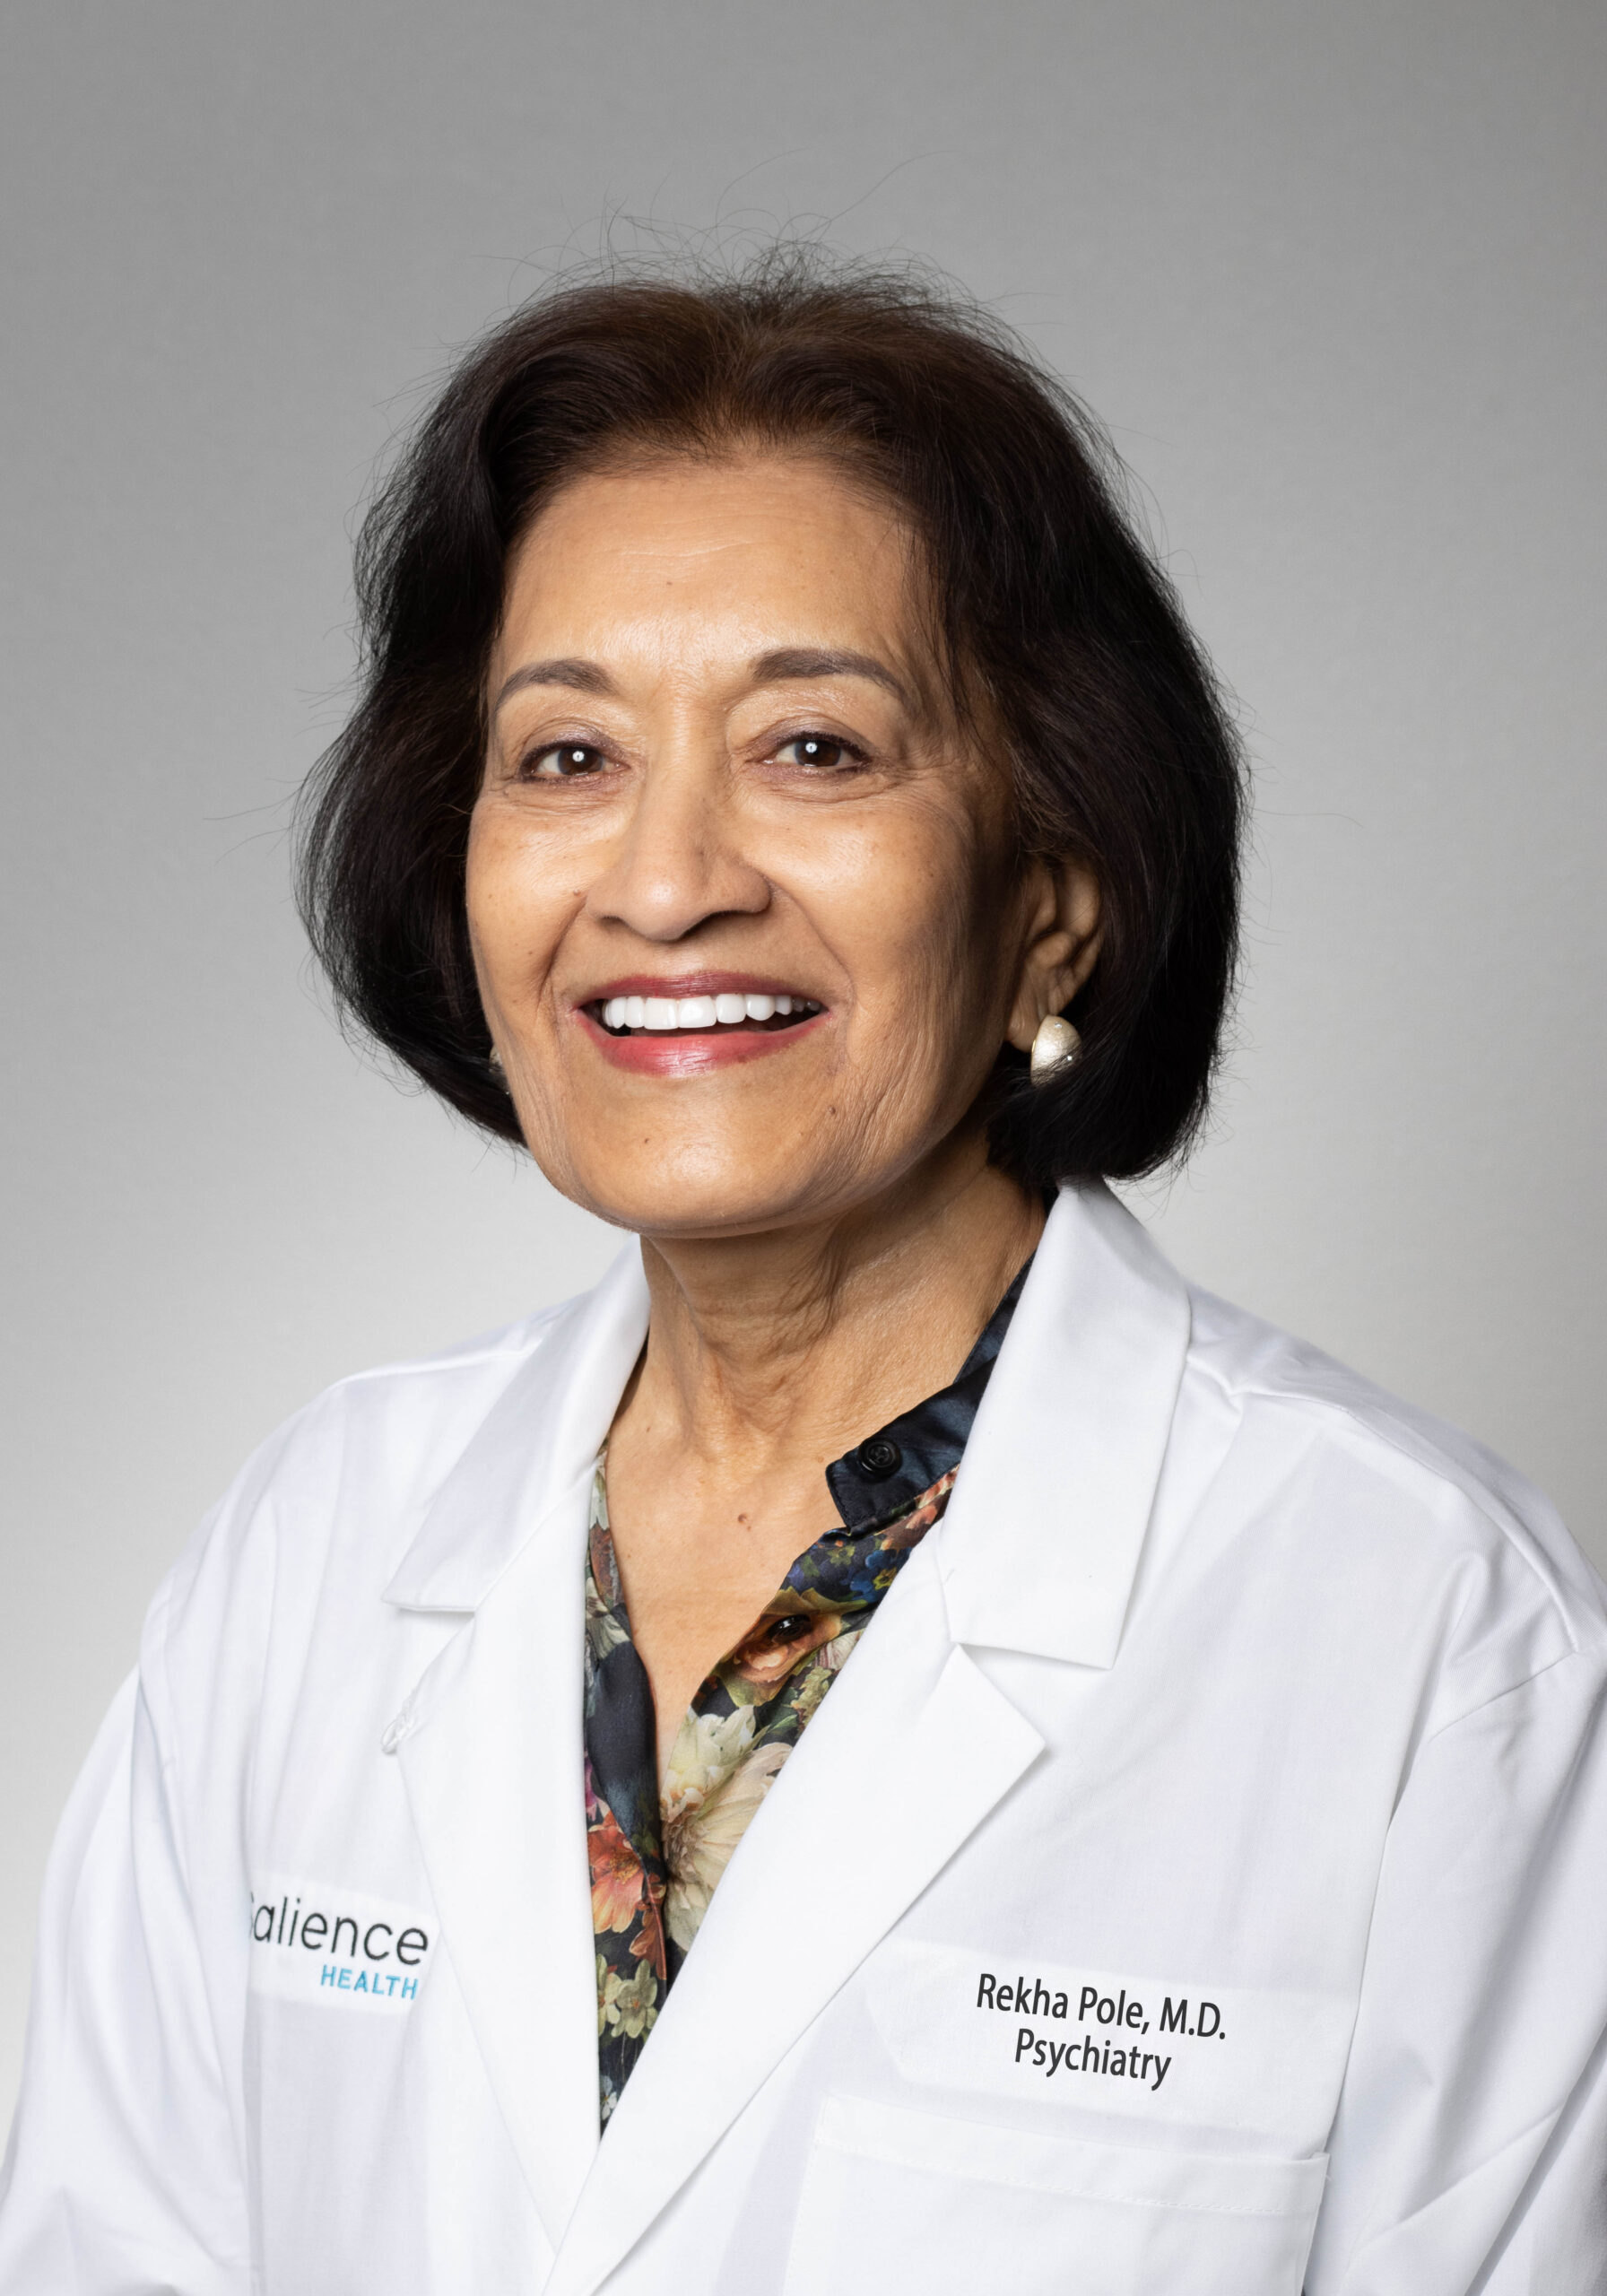 Dr. Rekha Pole, Psychiatrist at Salience Health